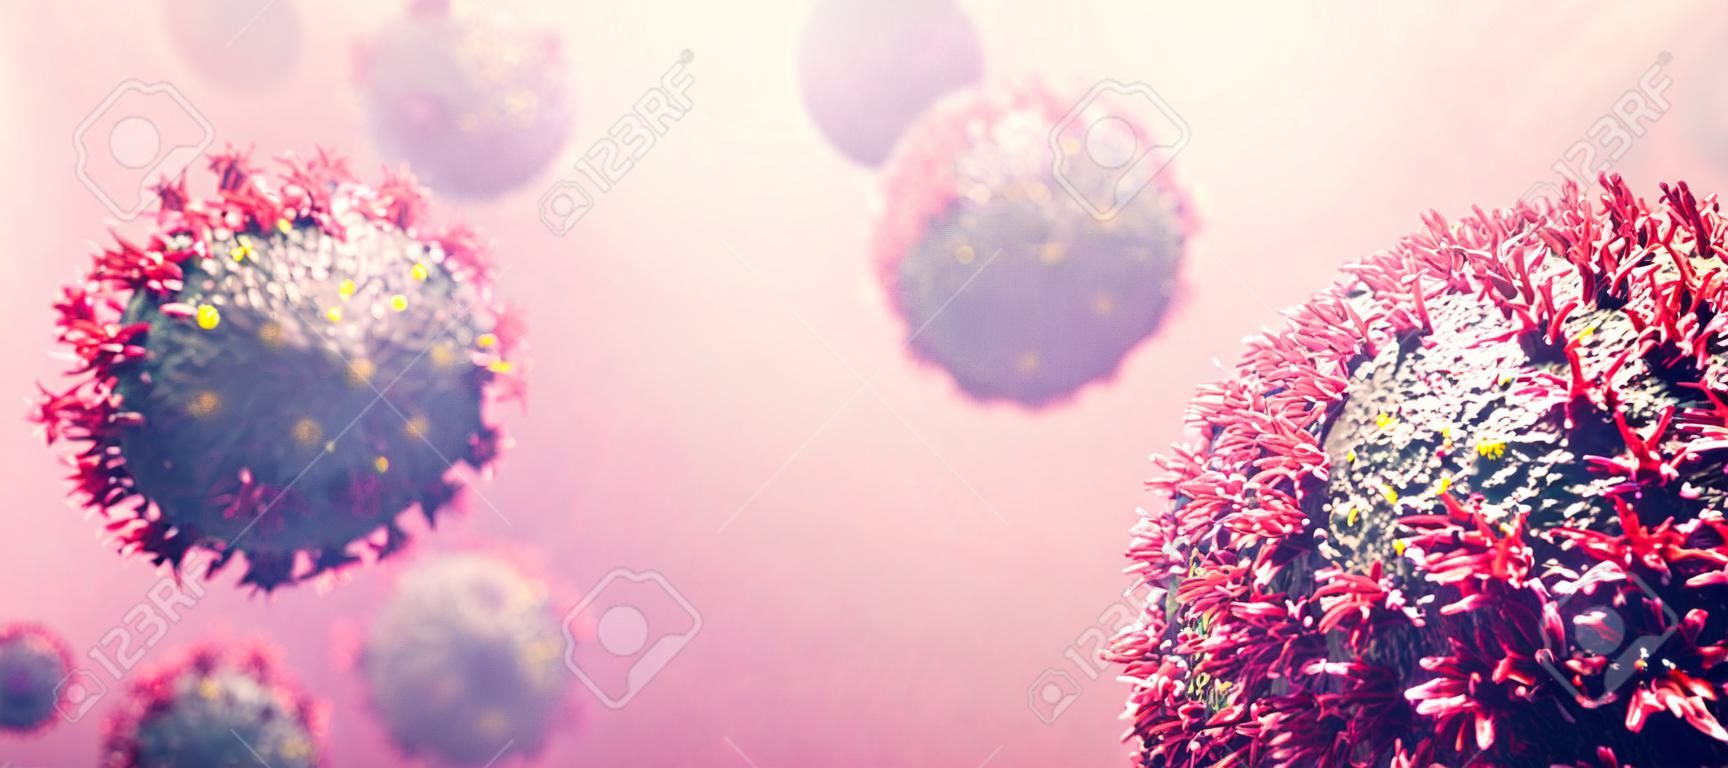 Organisme d'attaque du coronavirus COVID-19. Virus Corona provoquant une pandémie. Illustration 3D